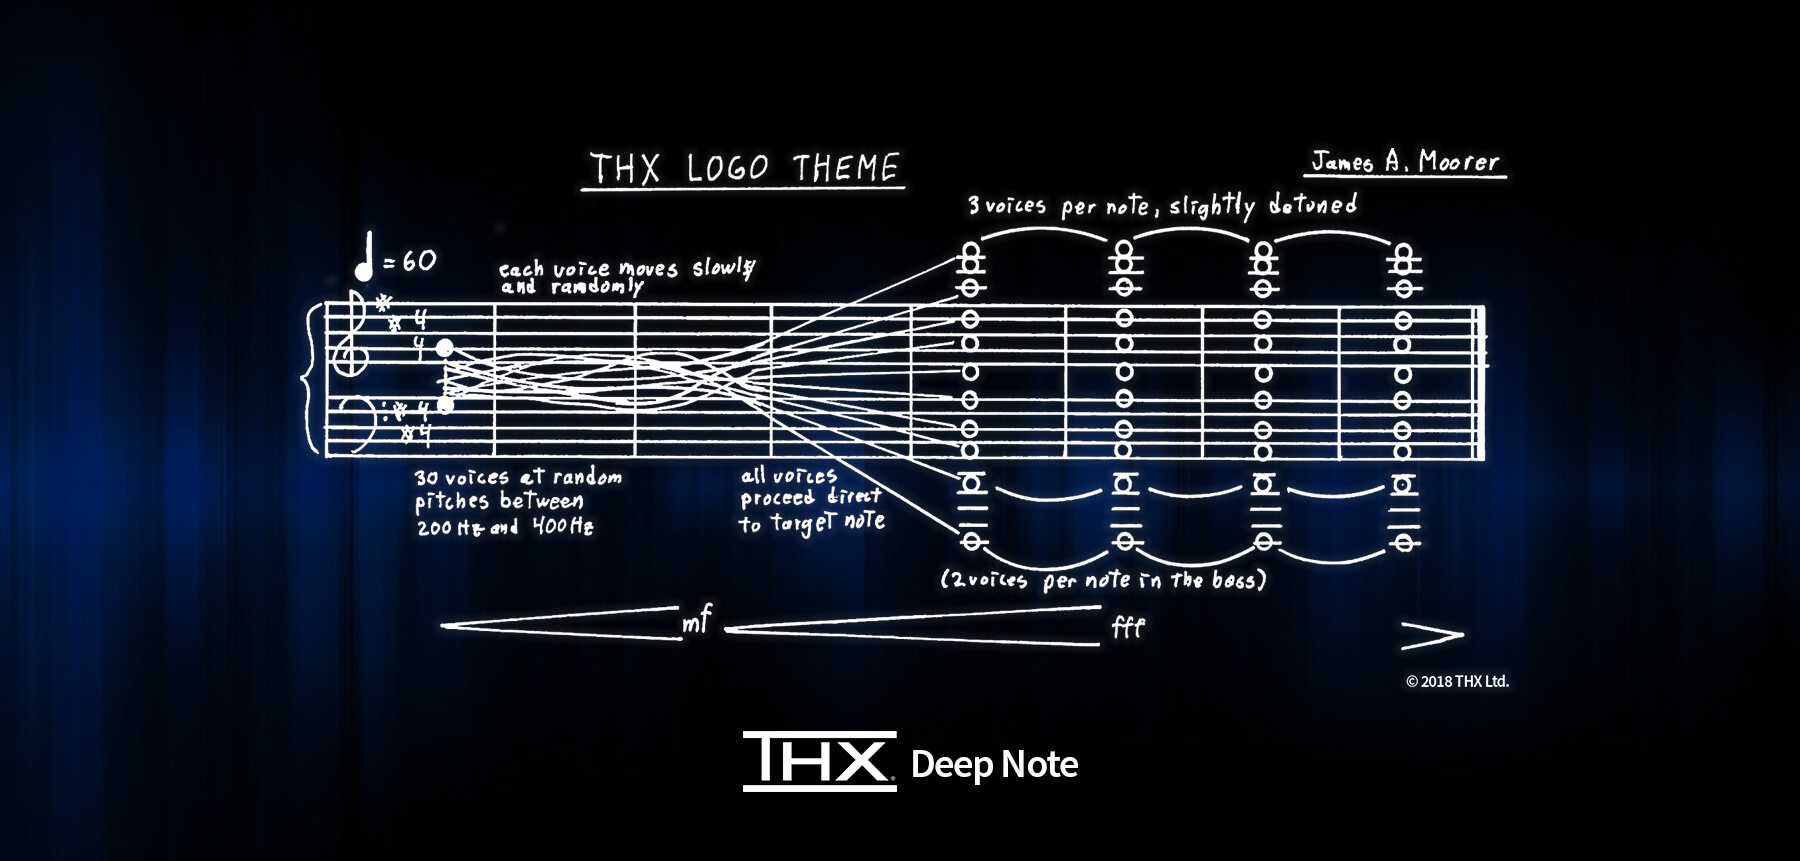 THX Deep Note – Our legendary sound